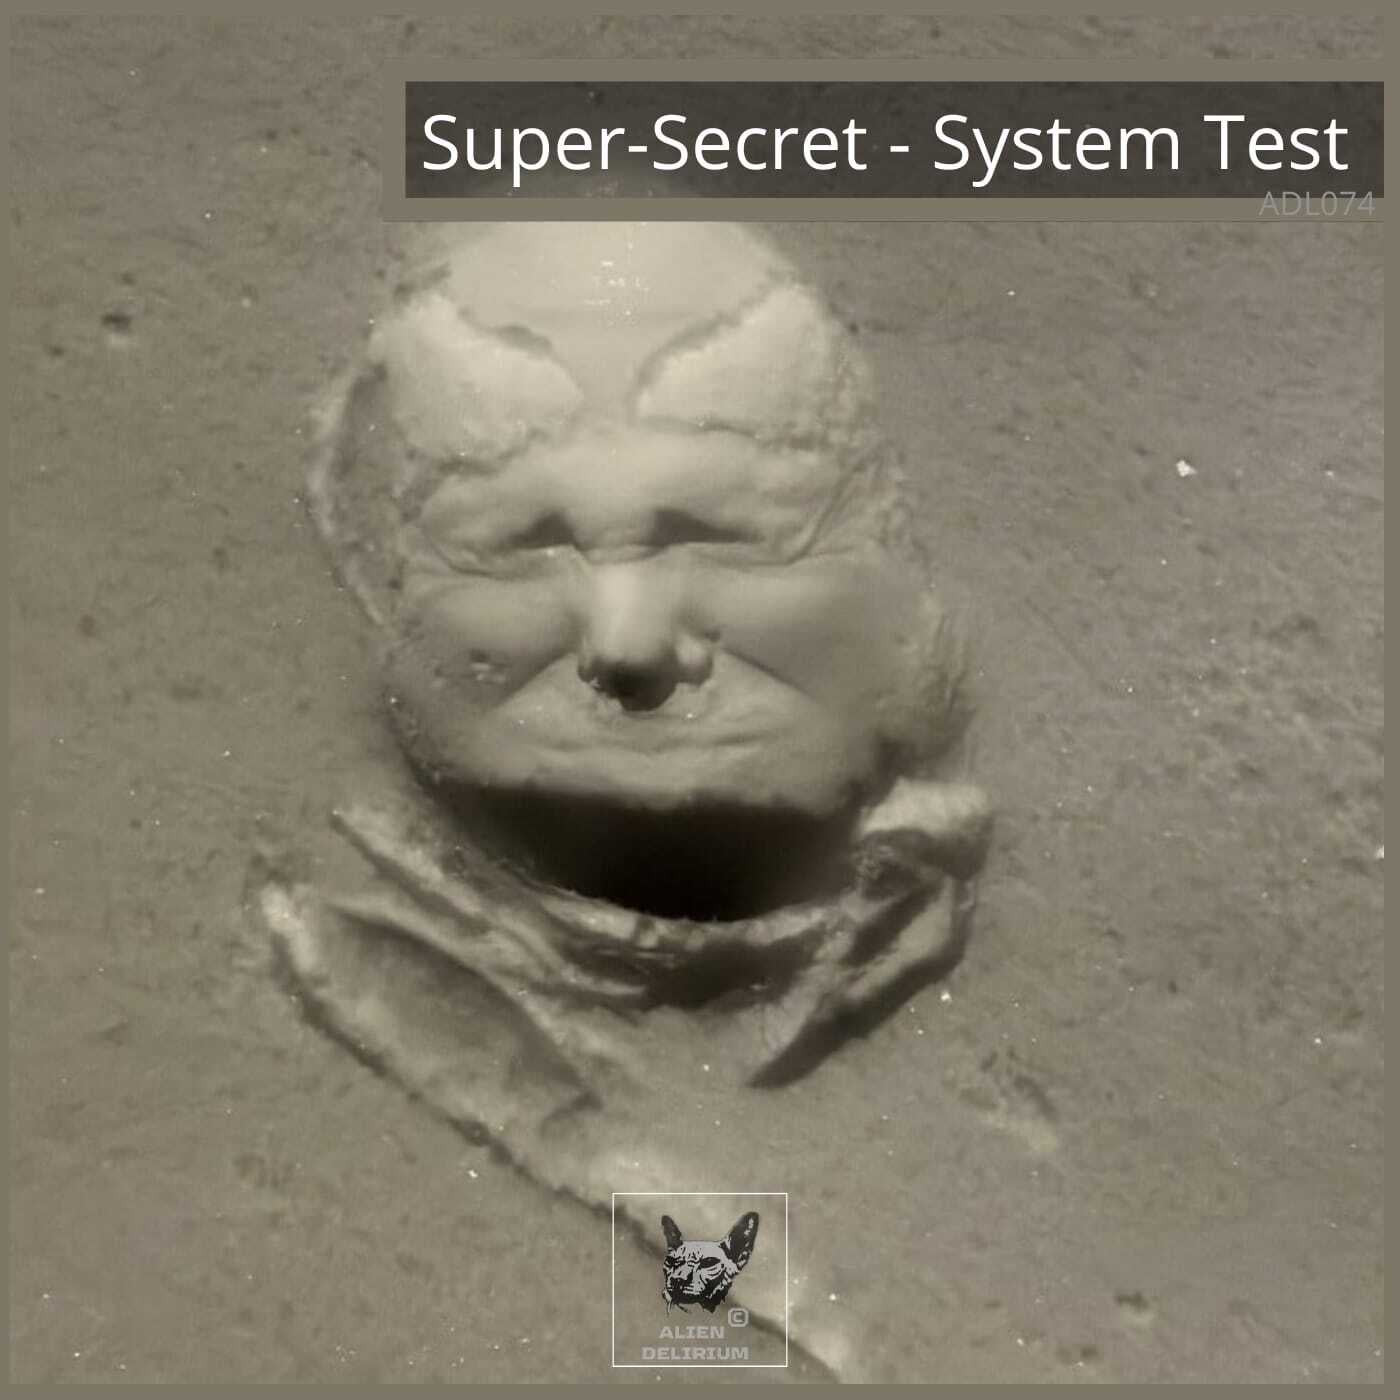 System Test